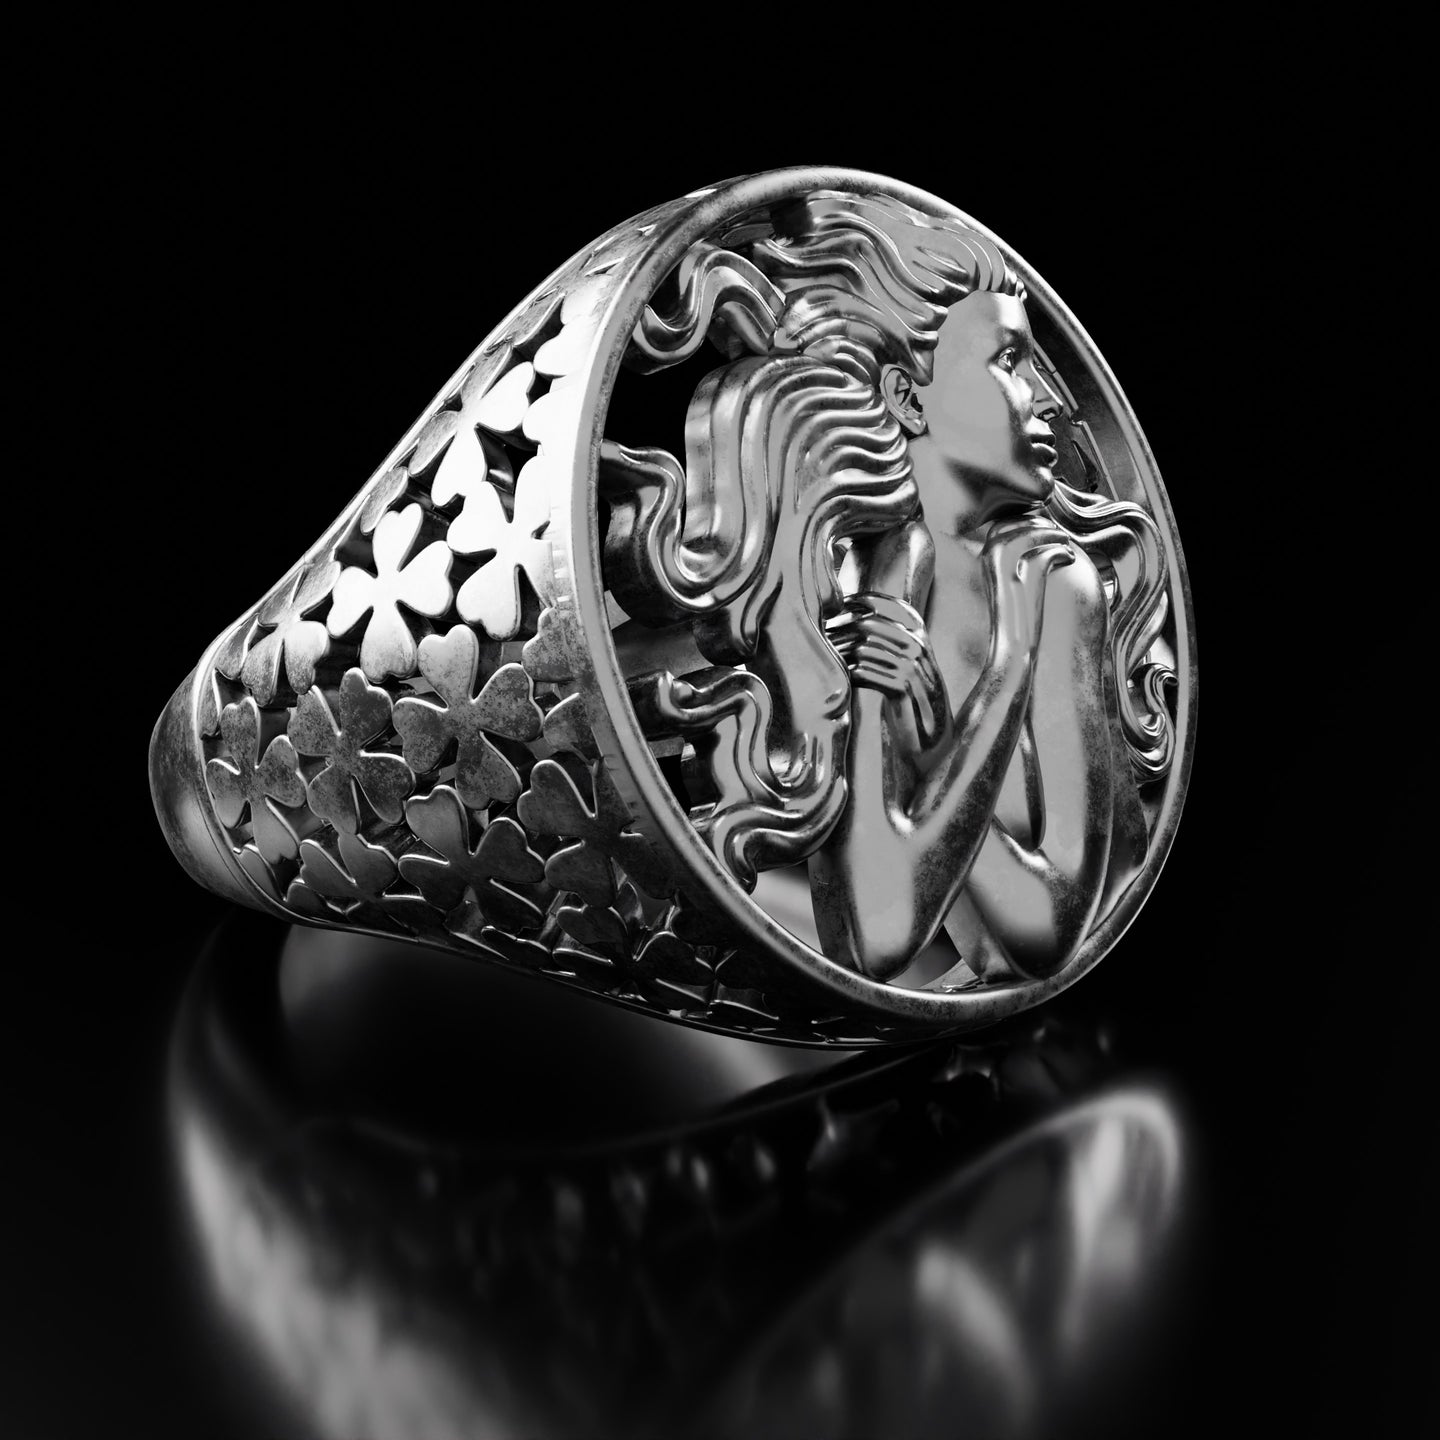 Virgo Ring - Fashion Jewelry by Yordy.